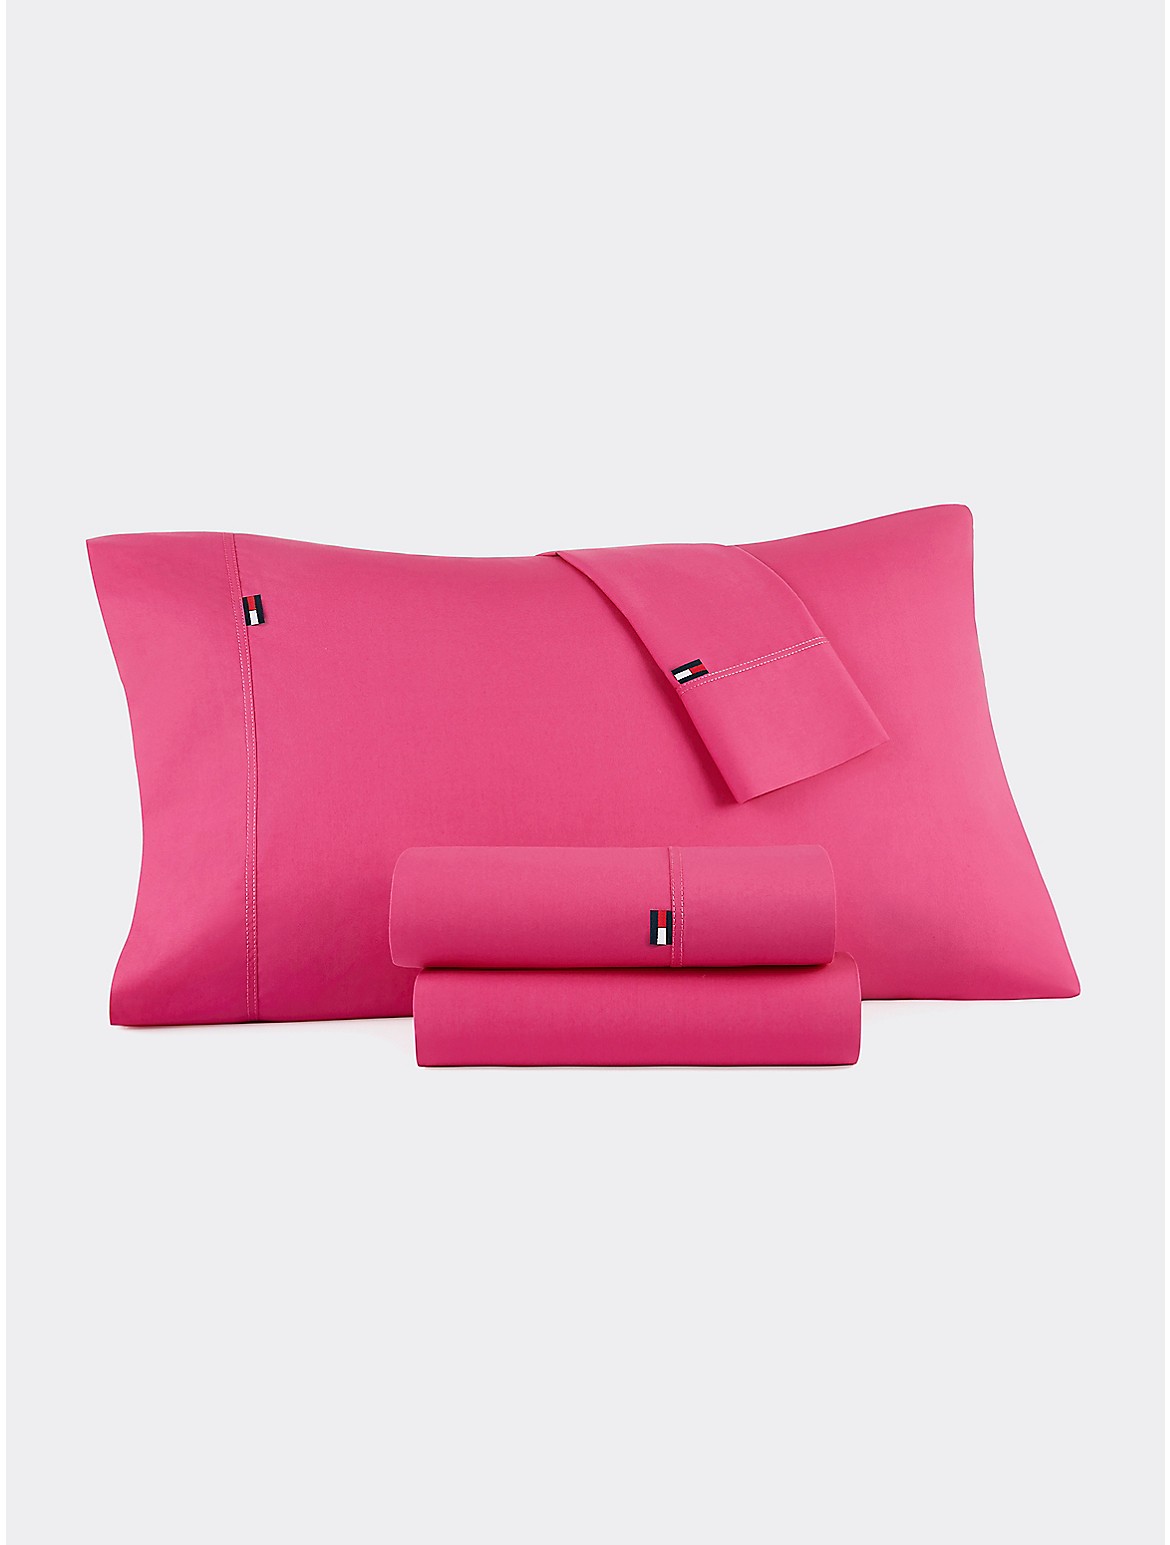 Tommy Hilfiger Signature Solid Pink Sheet Set - Pink - FULL